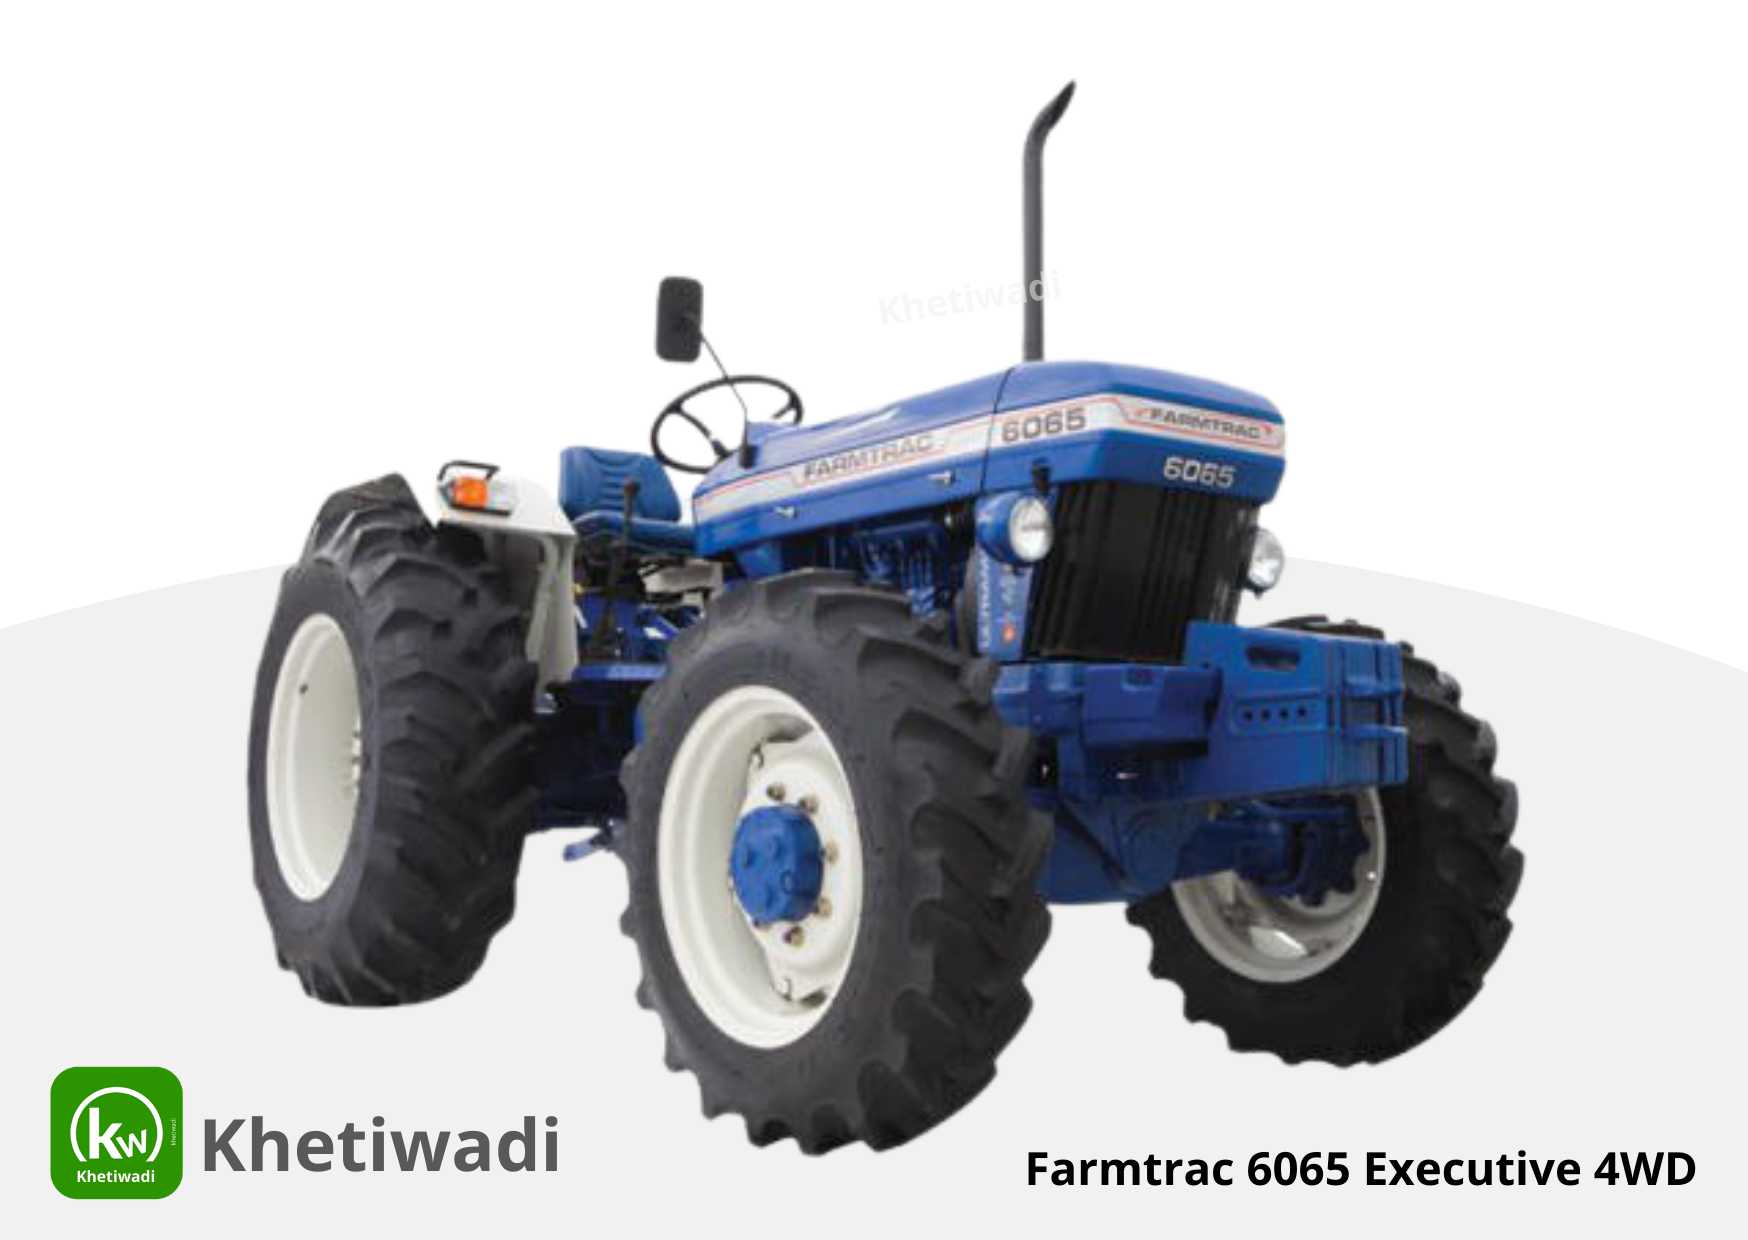 Farmtrac 6065 Executive 4WD image